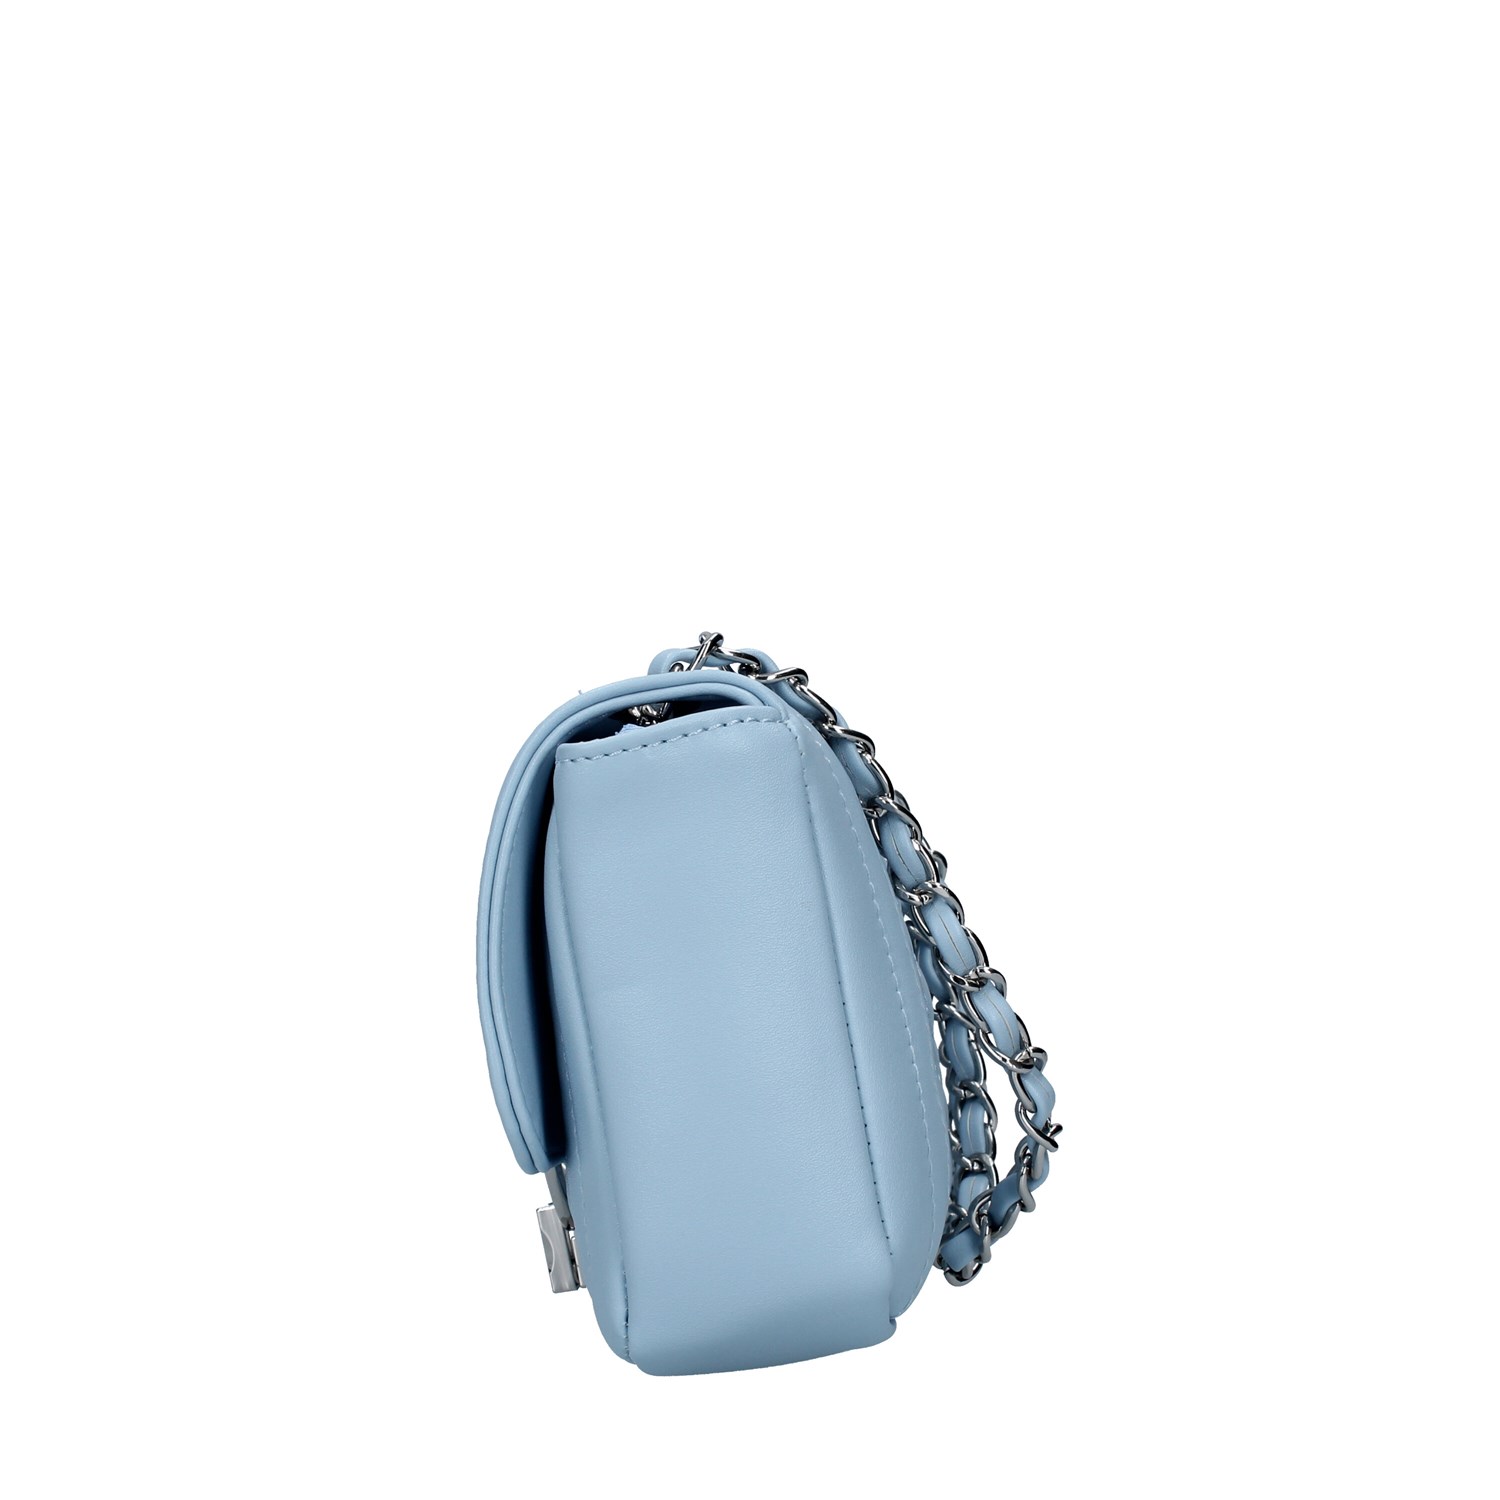 Gattinoni Roma Bags Accessories Shoulder Strap LIGHT BLUE BINTK7944WQ